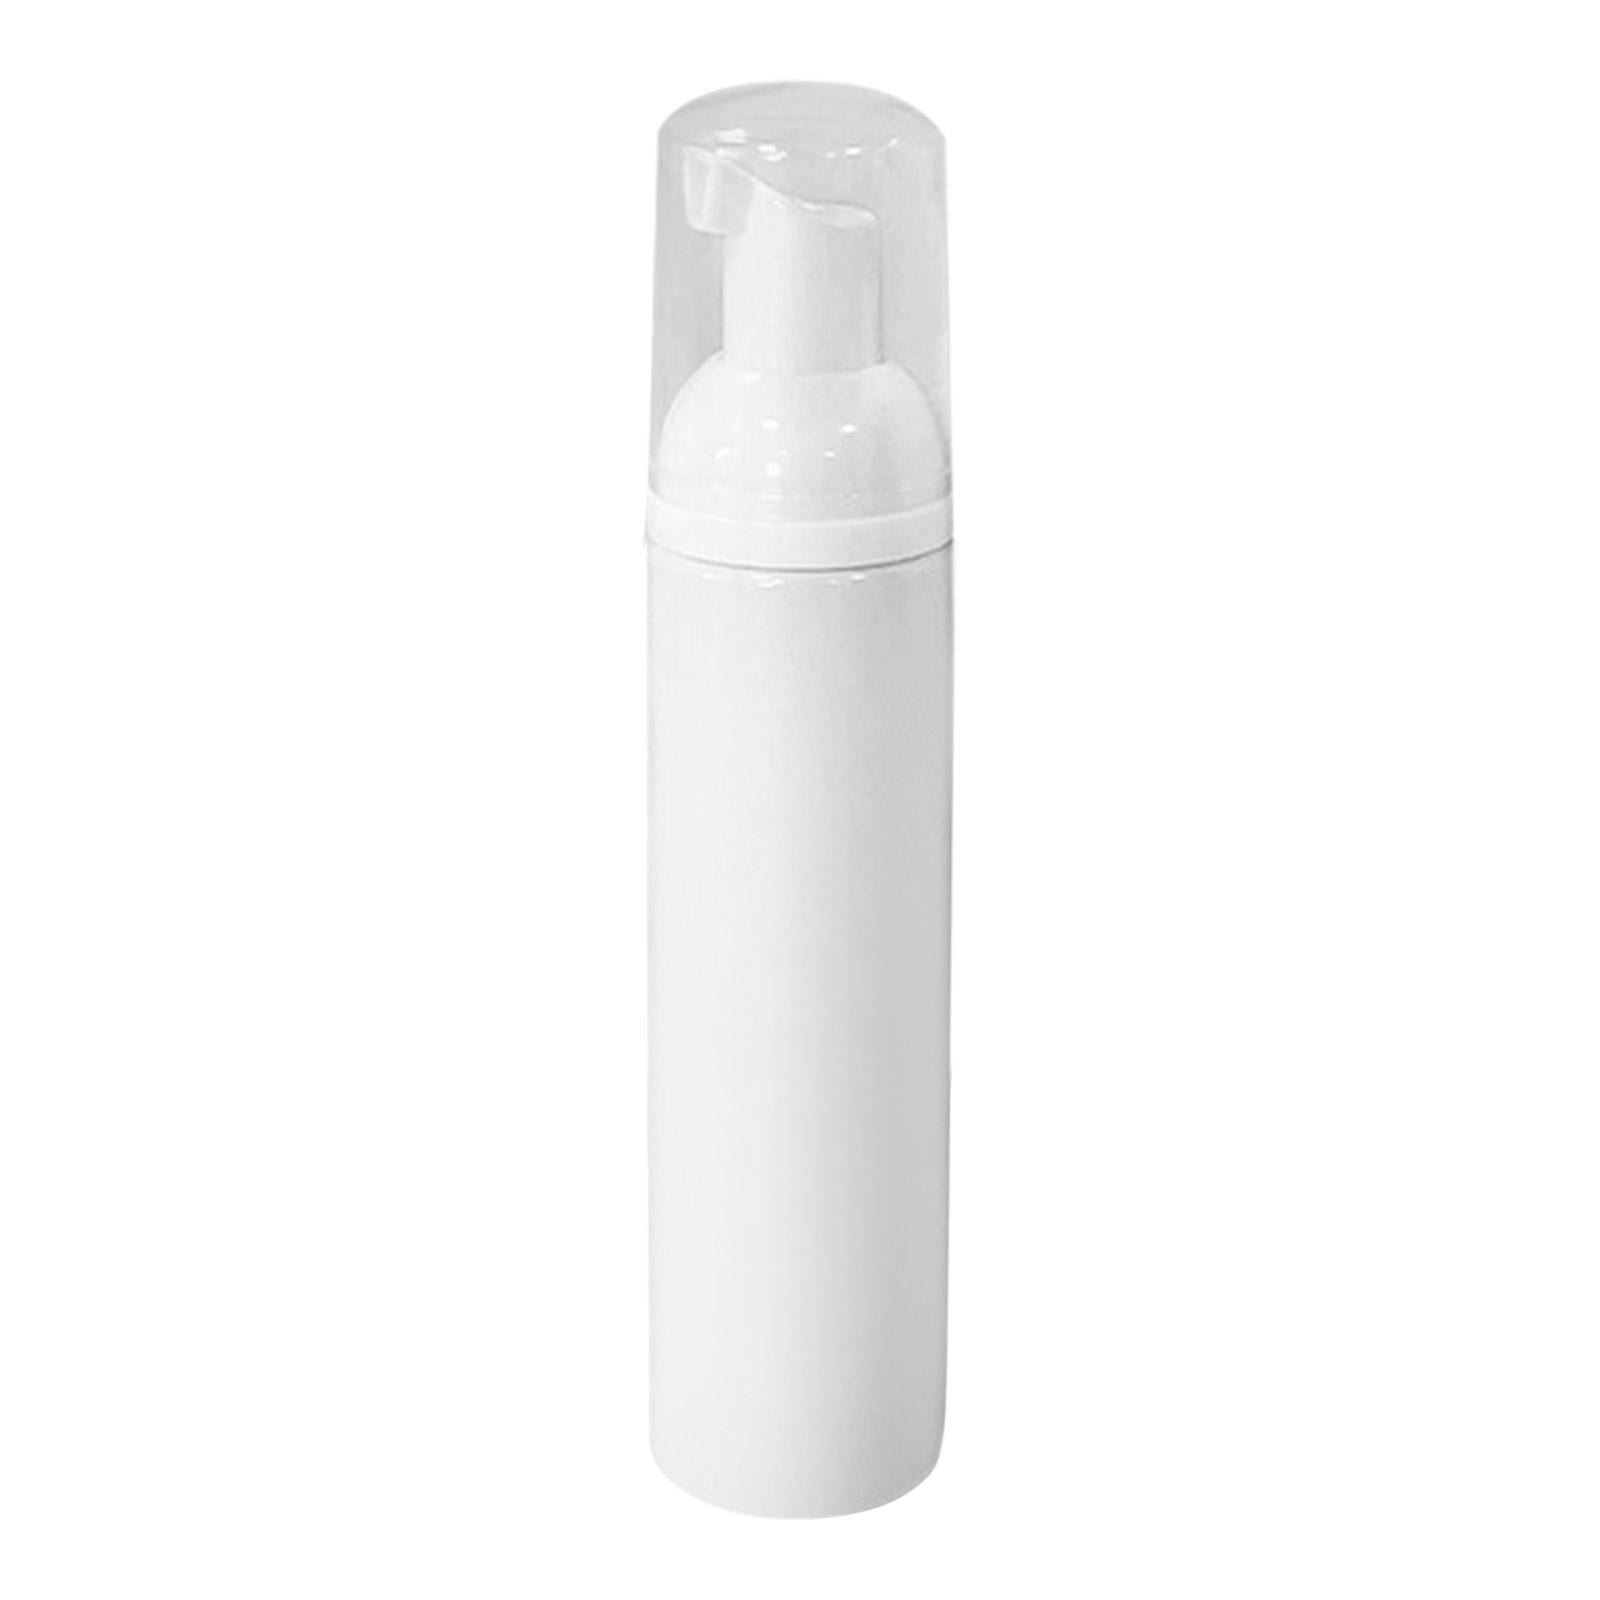 Foam Bottle Portable Facial Cleanser Packaged In White Mousse Foaming  Bottle Plastic L2F6 